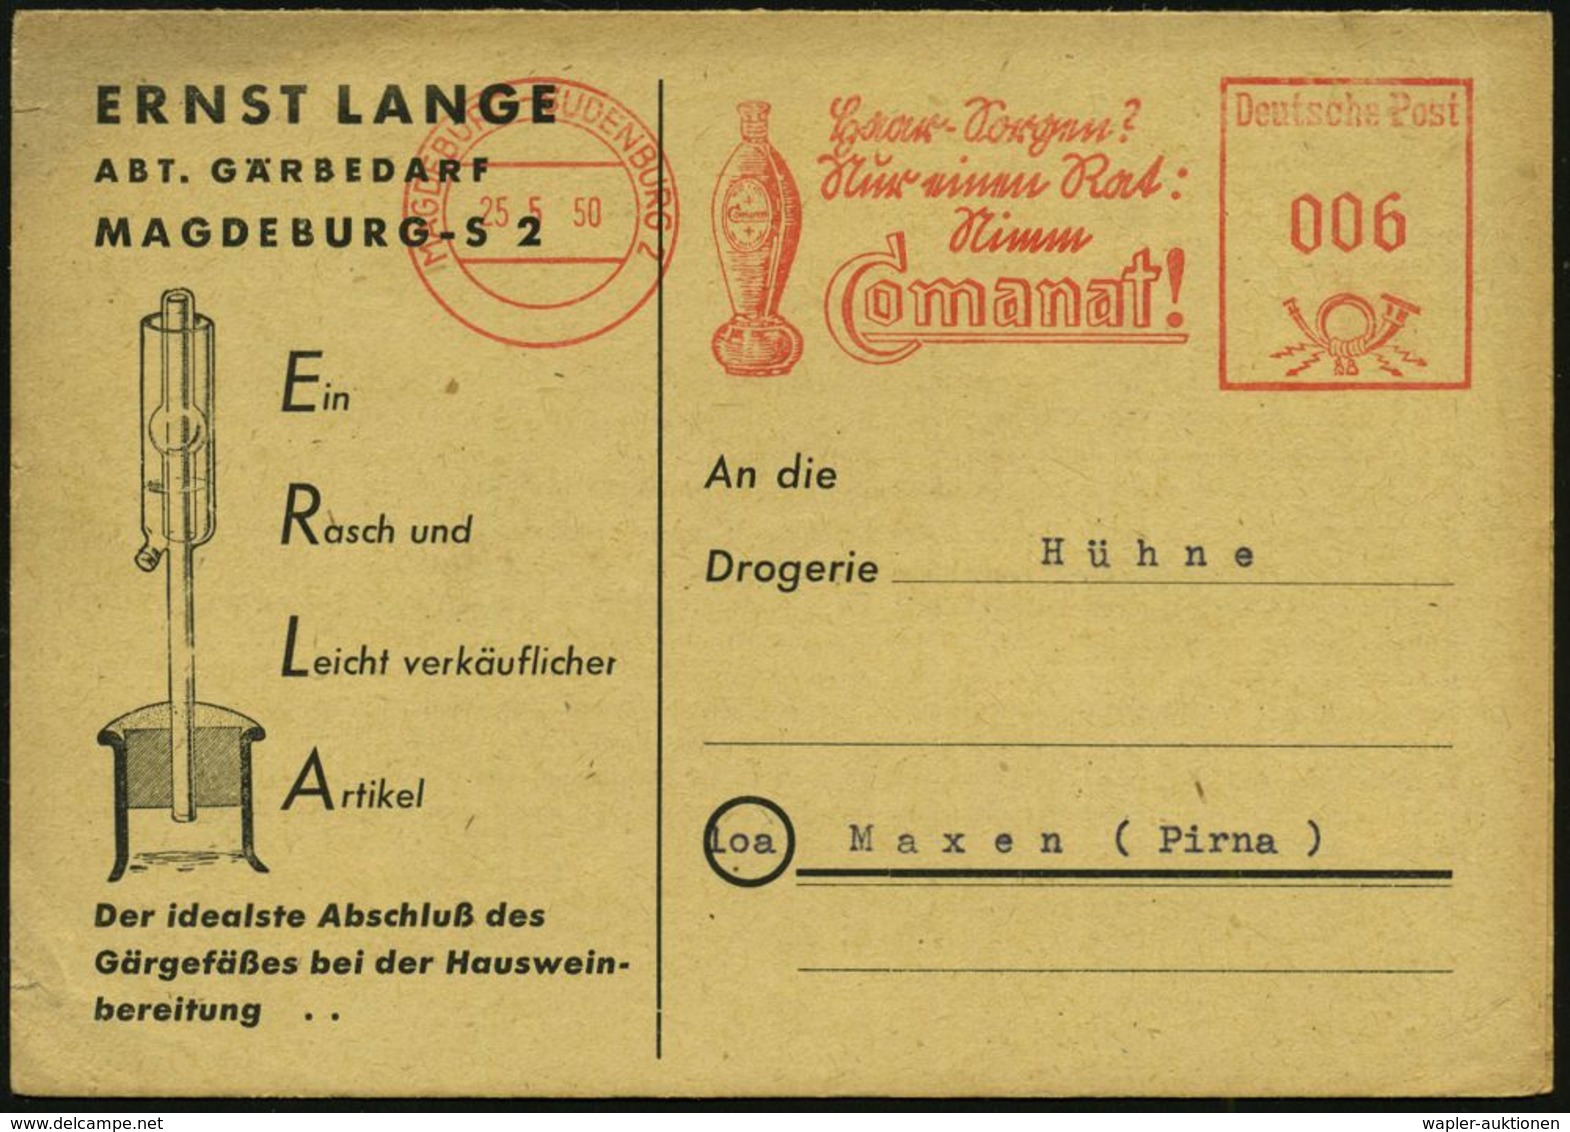 HAAR / BART / RASUR / FRISEUR : MAGDEBURG-SUDENBURG 2/ Haar-Sorgen?/ Nur Einen Rat./ Nimm/ Comanat! 1950 (25.5.) AFS, Te - Pharmacy